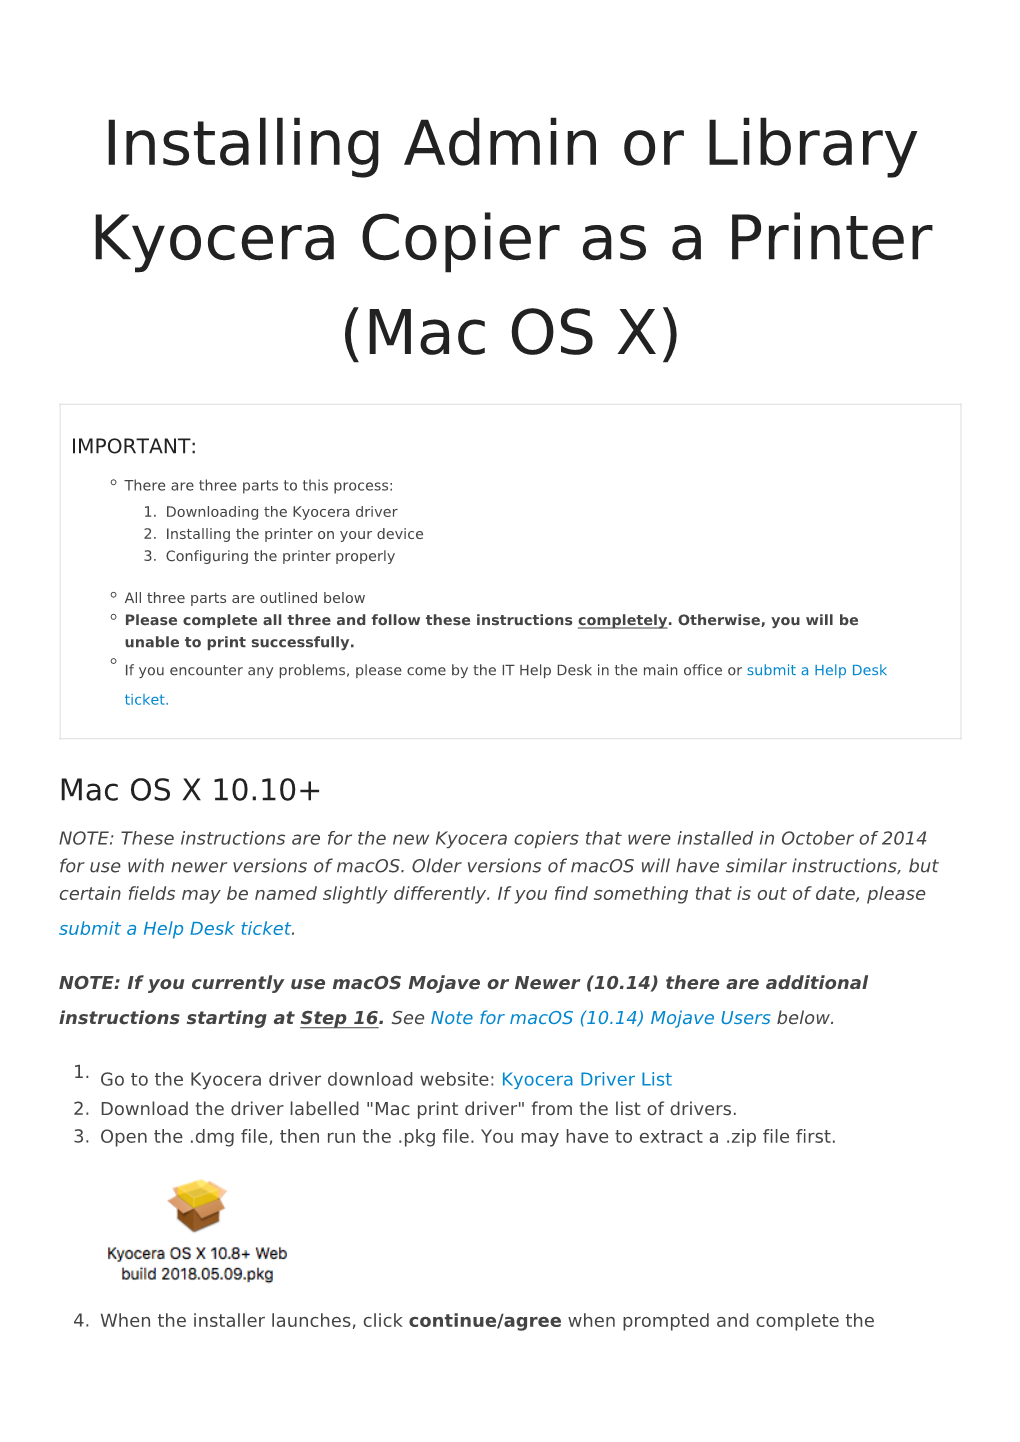 Installing Admin Or Library Kyocera Copier As a Printer (Mac OS X)